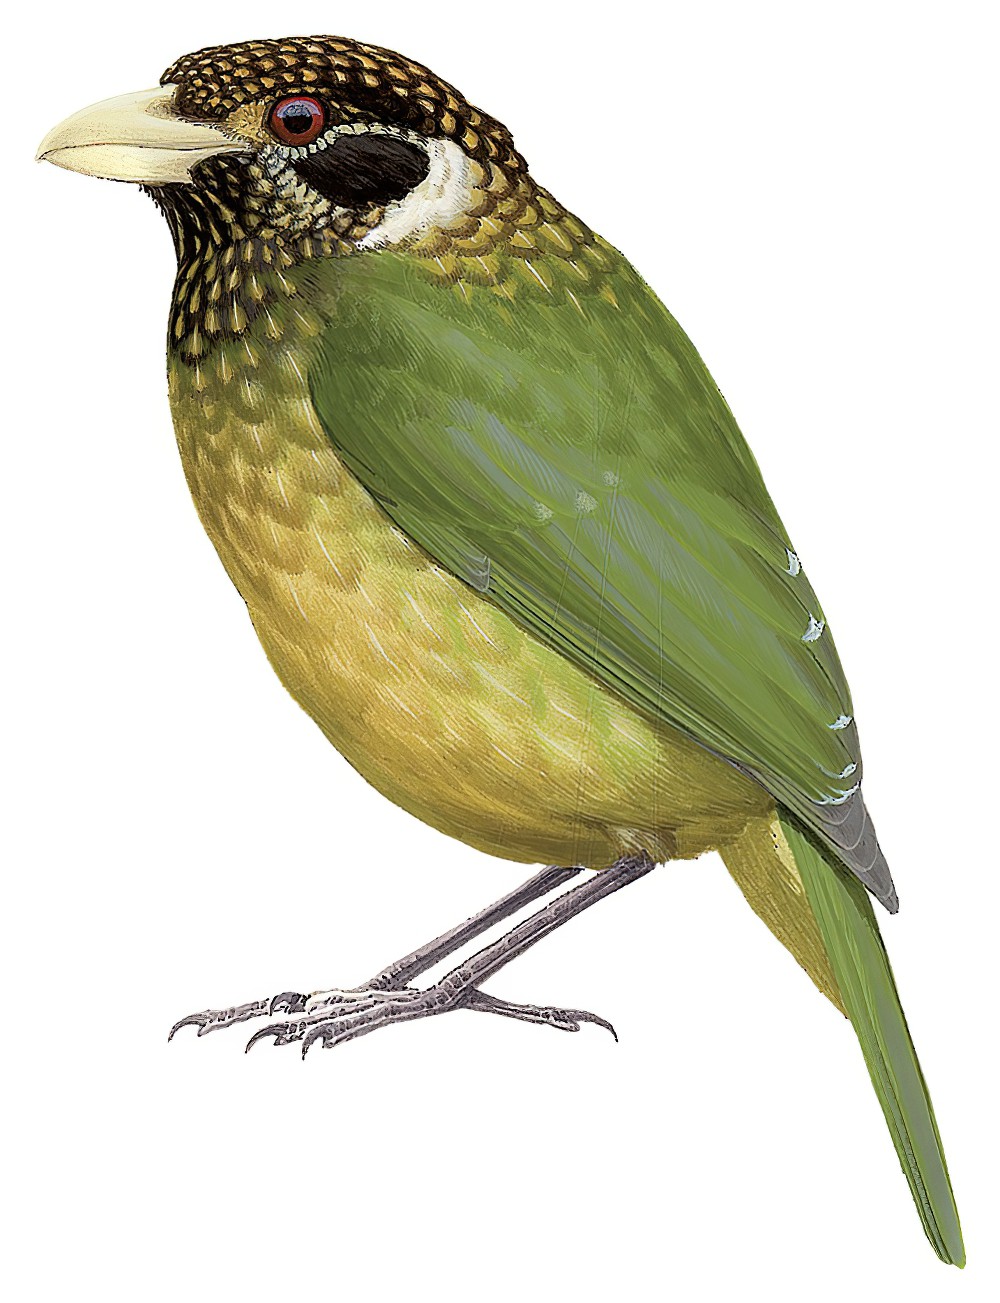 Northern Catbird / Ailuroedus jobiensis